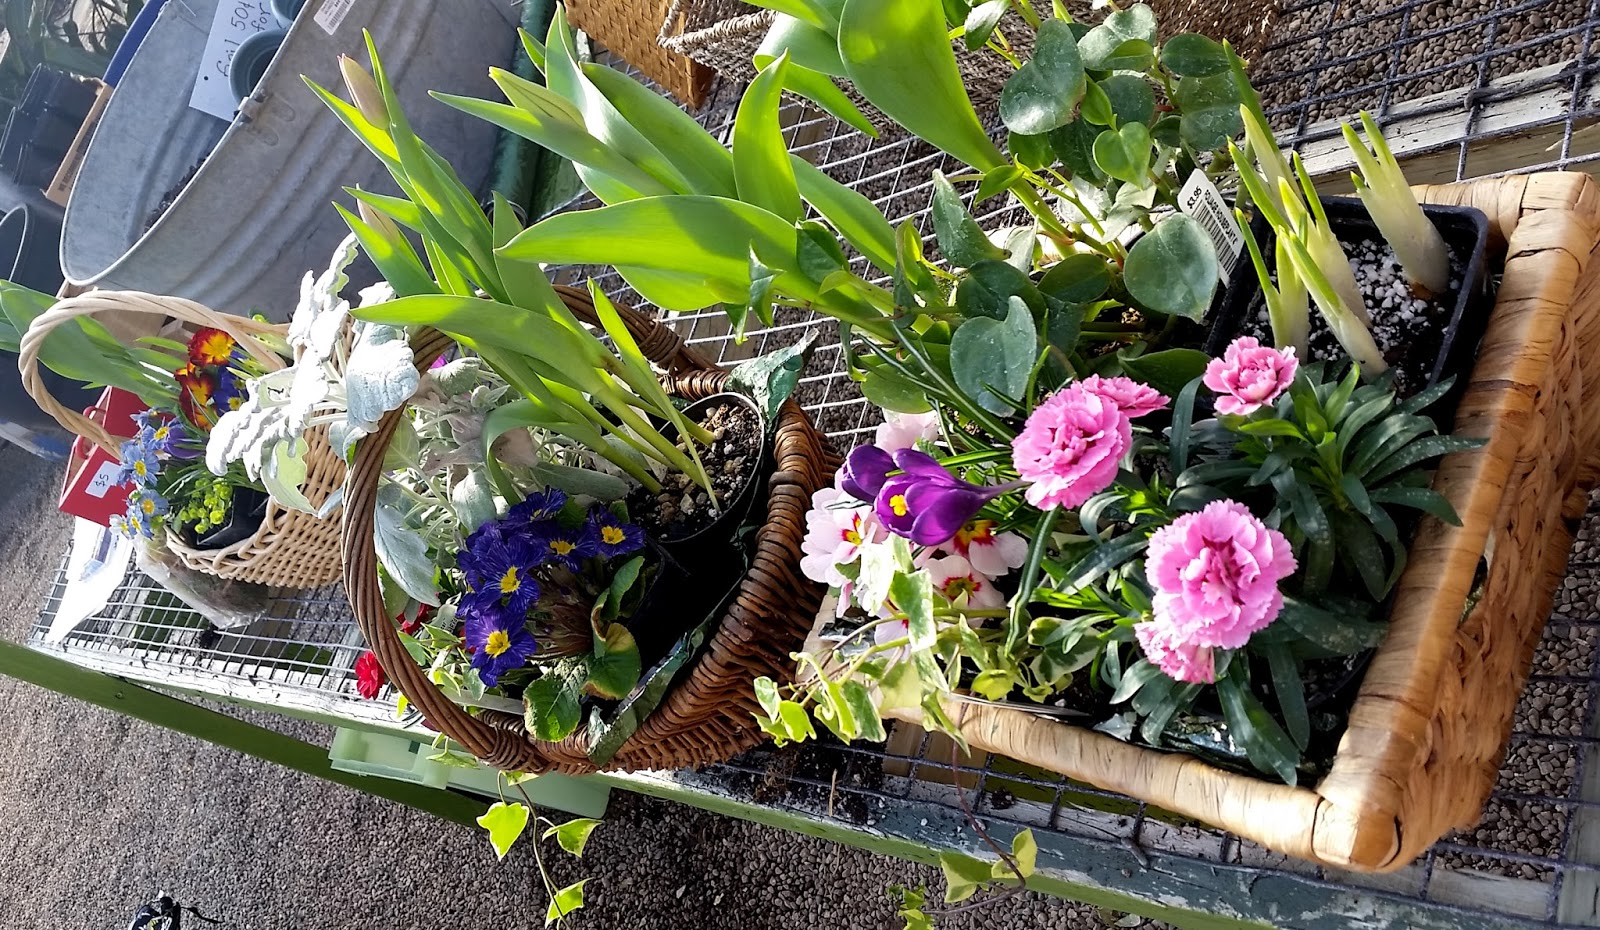 Edward's Greenhouse floral baskets